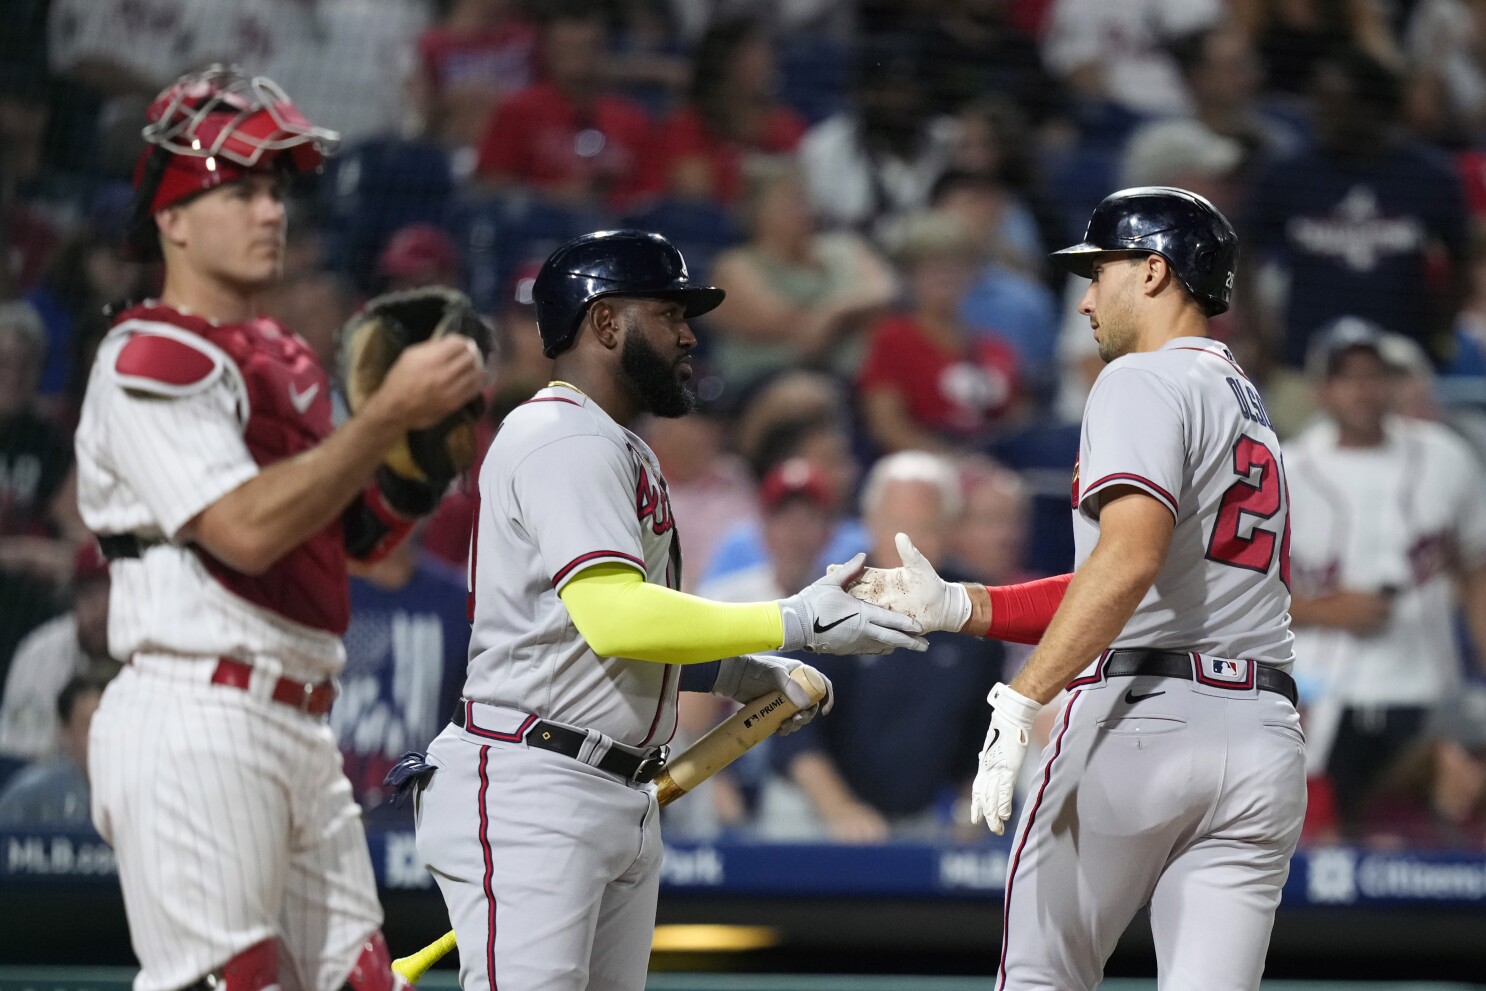 Phillies tie World Series home run mark in win over Astros - Los